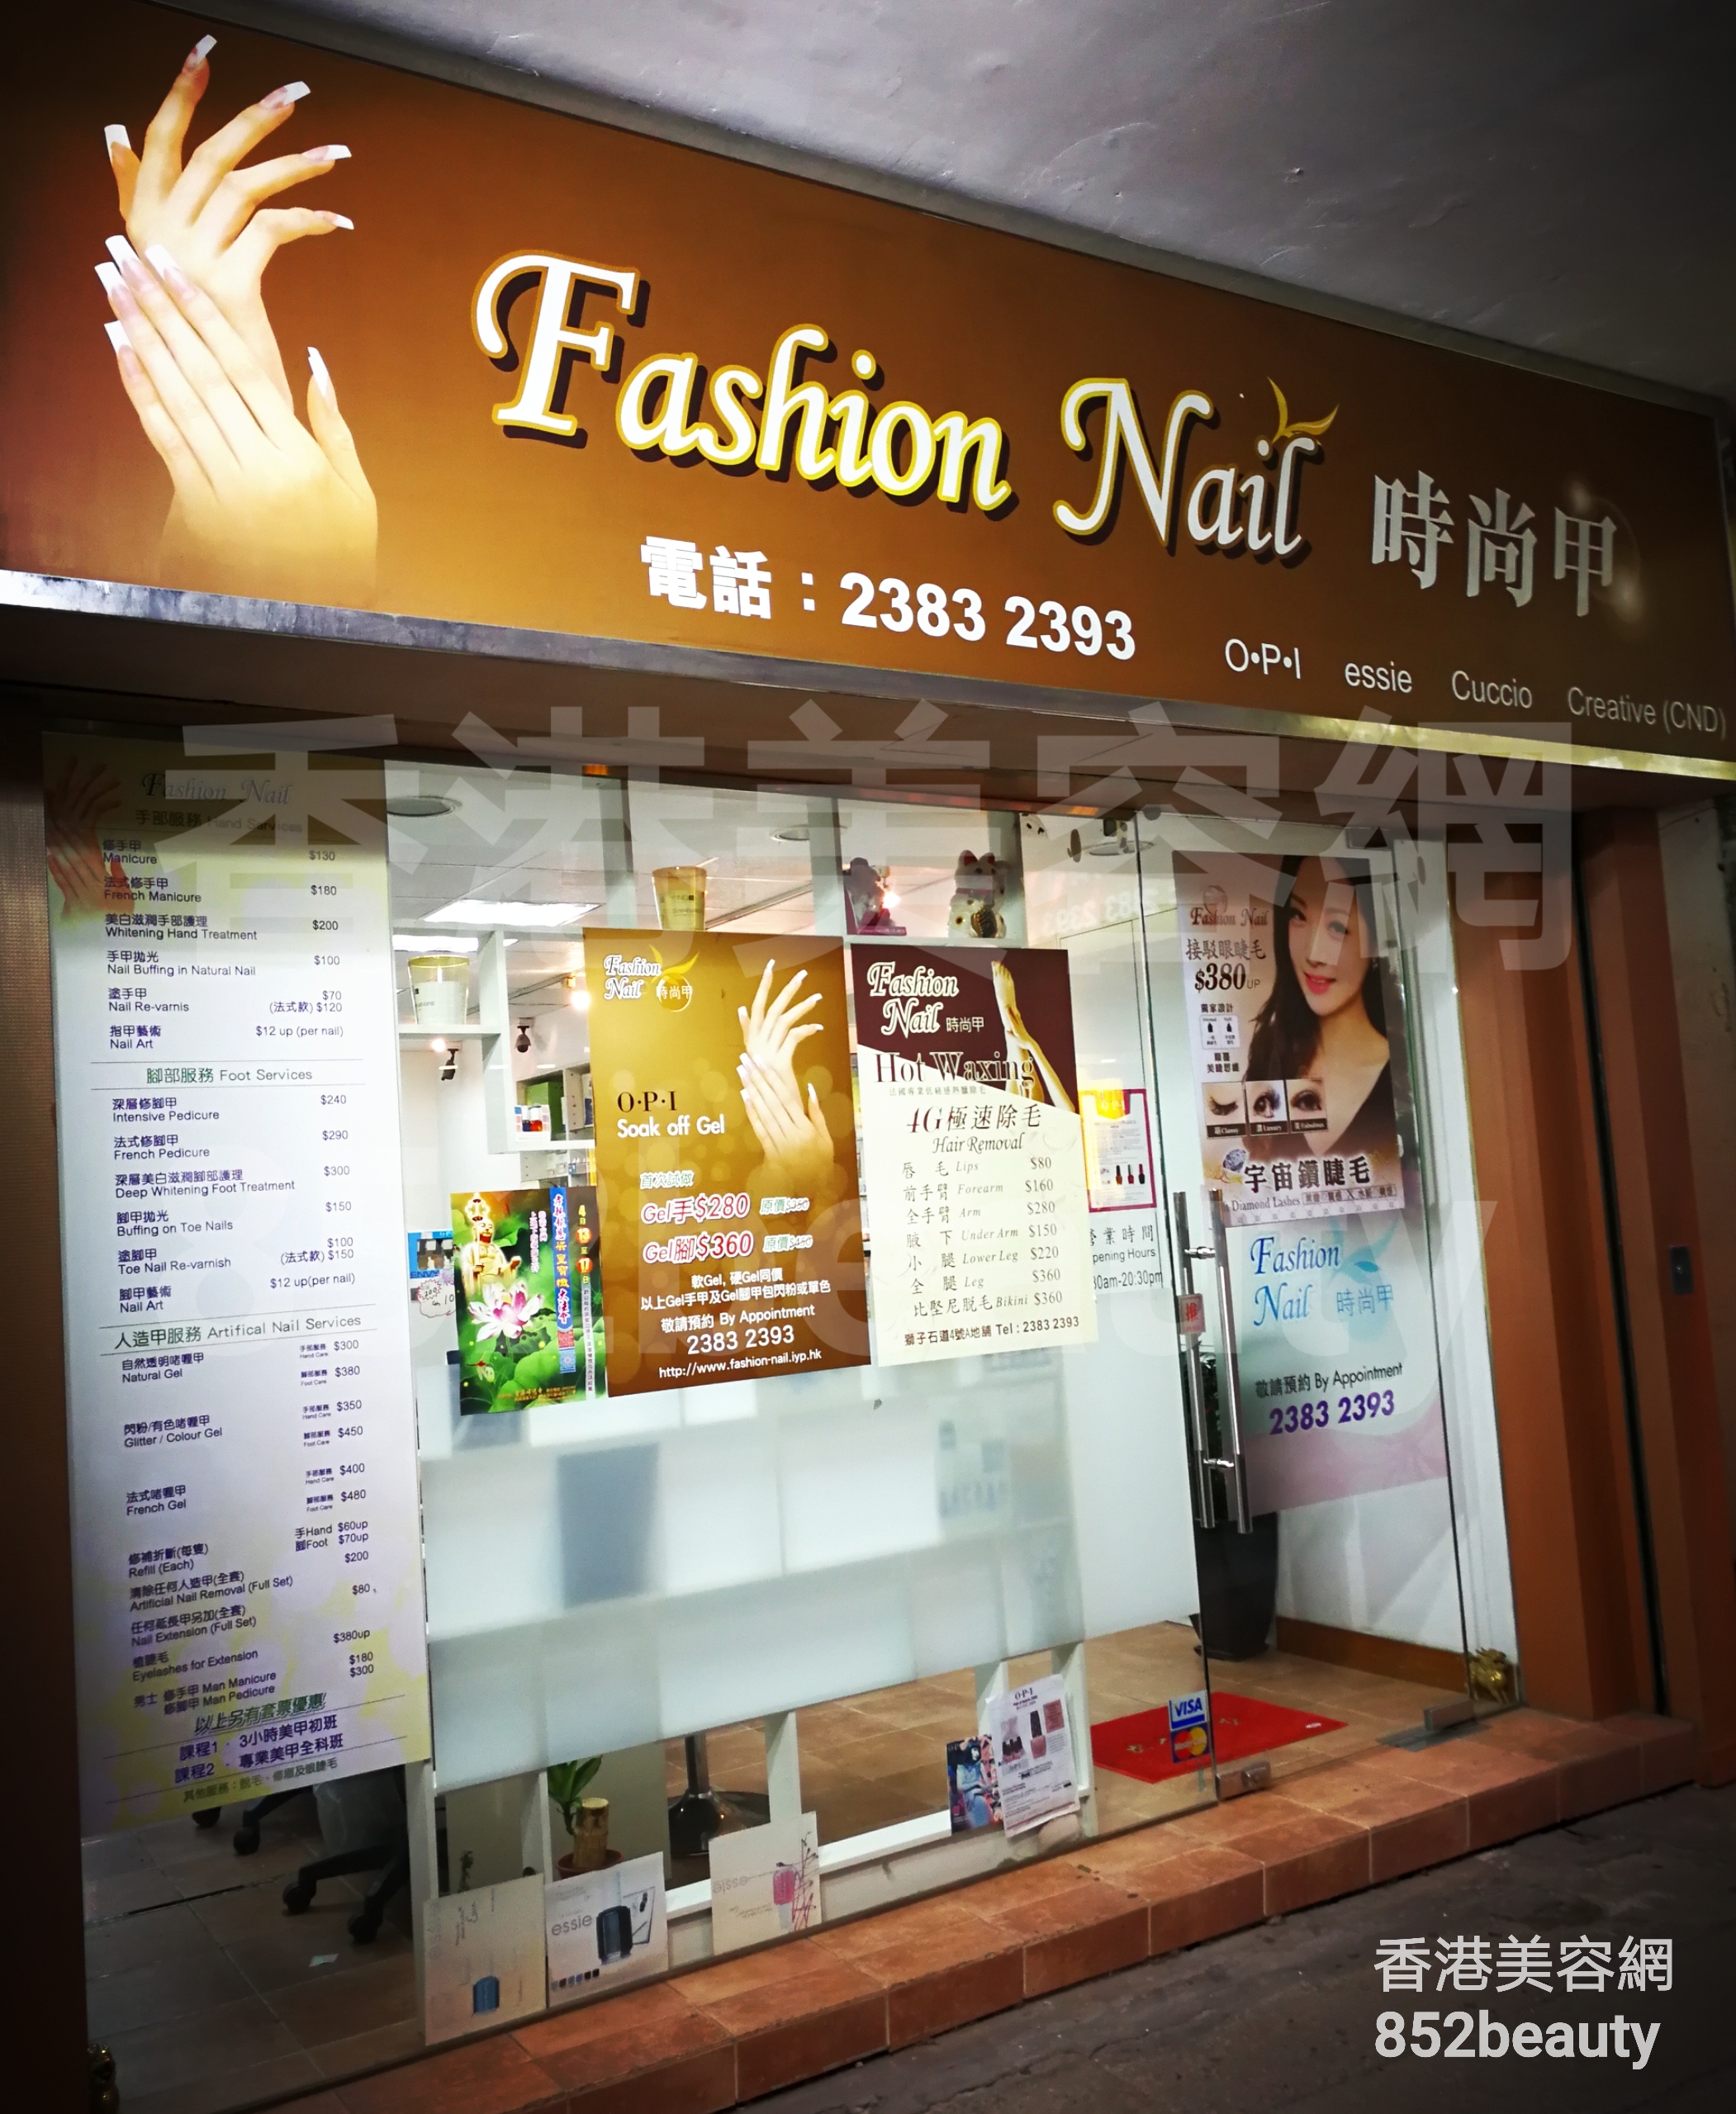 美容院 Beauty Salon: Fashion Nail 時尚甲